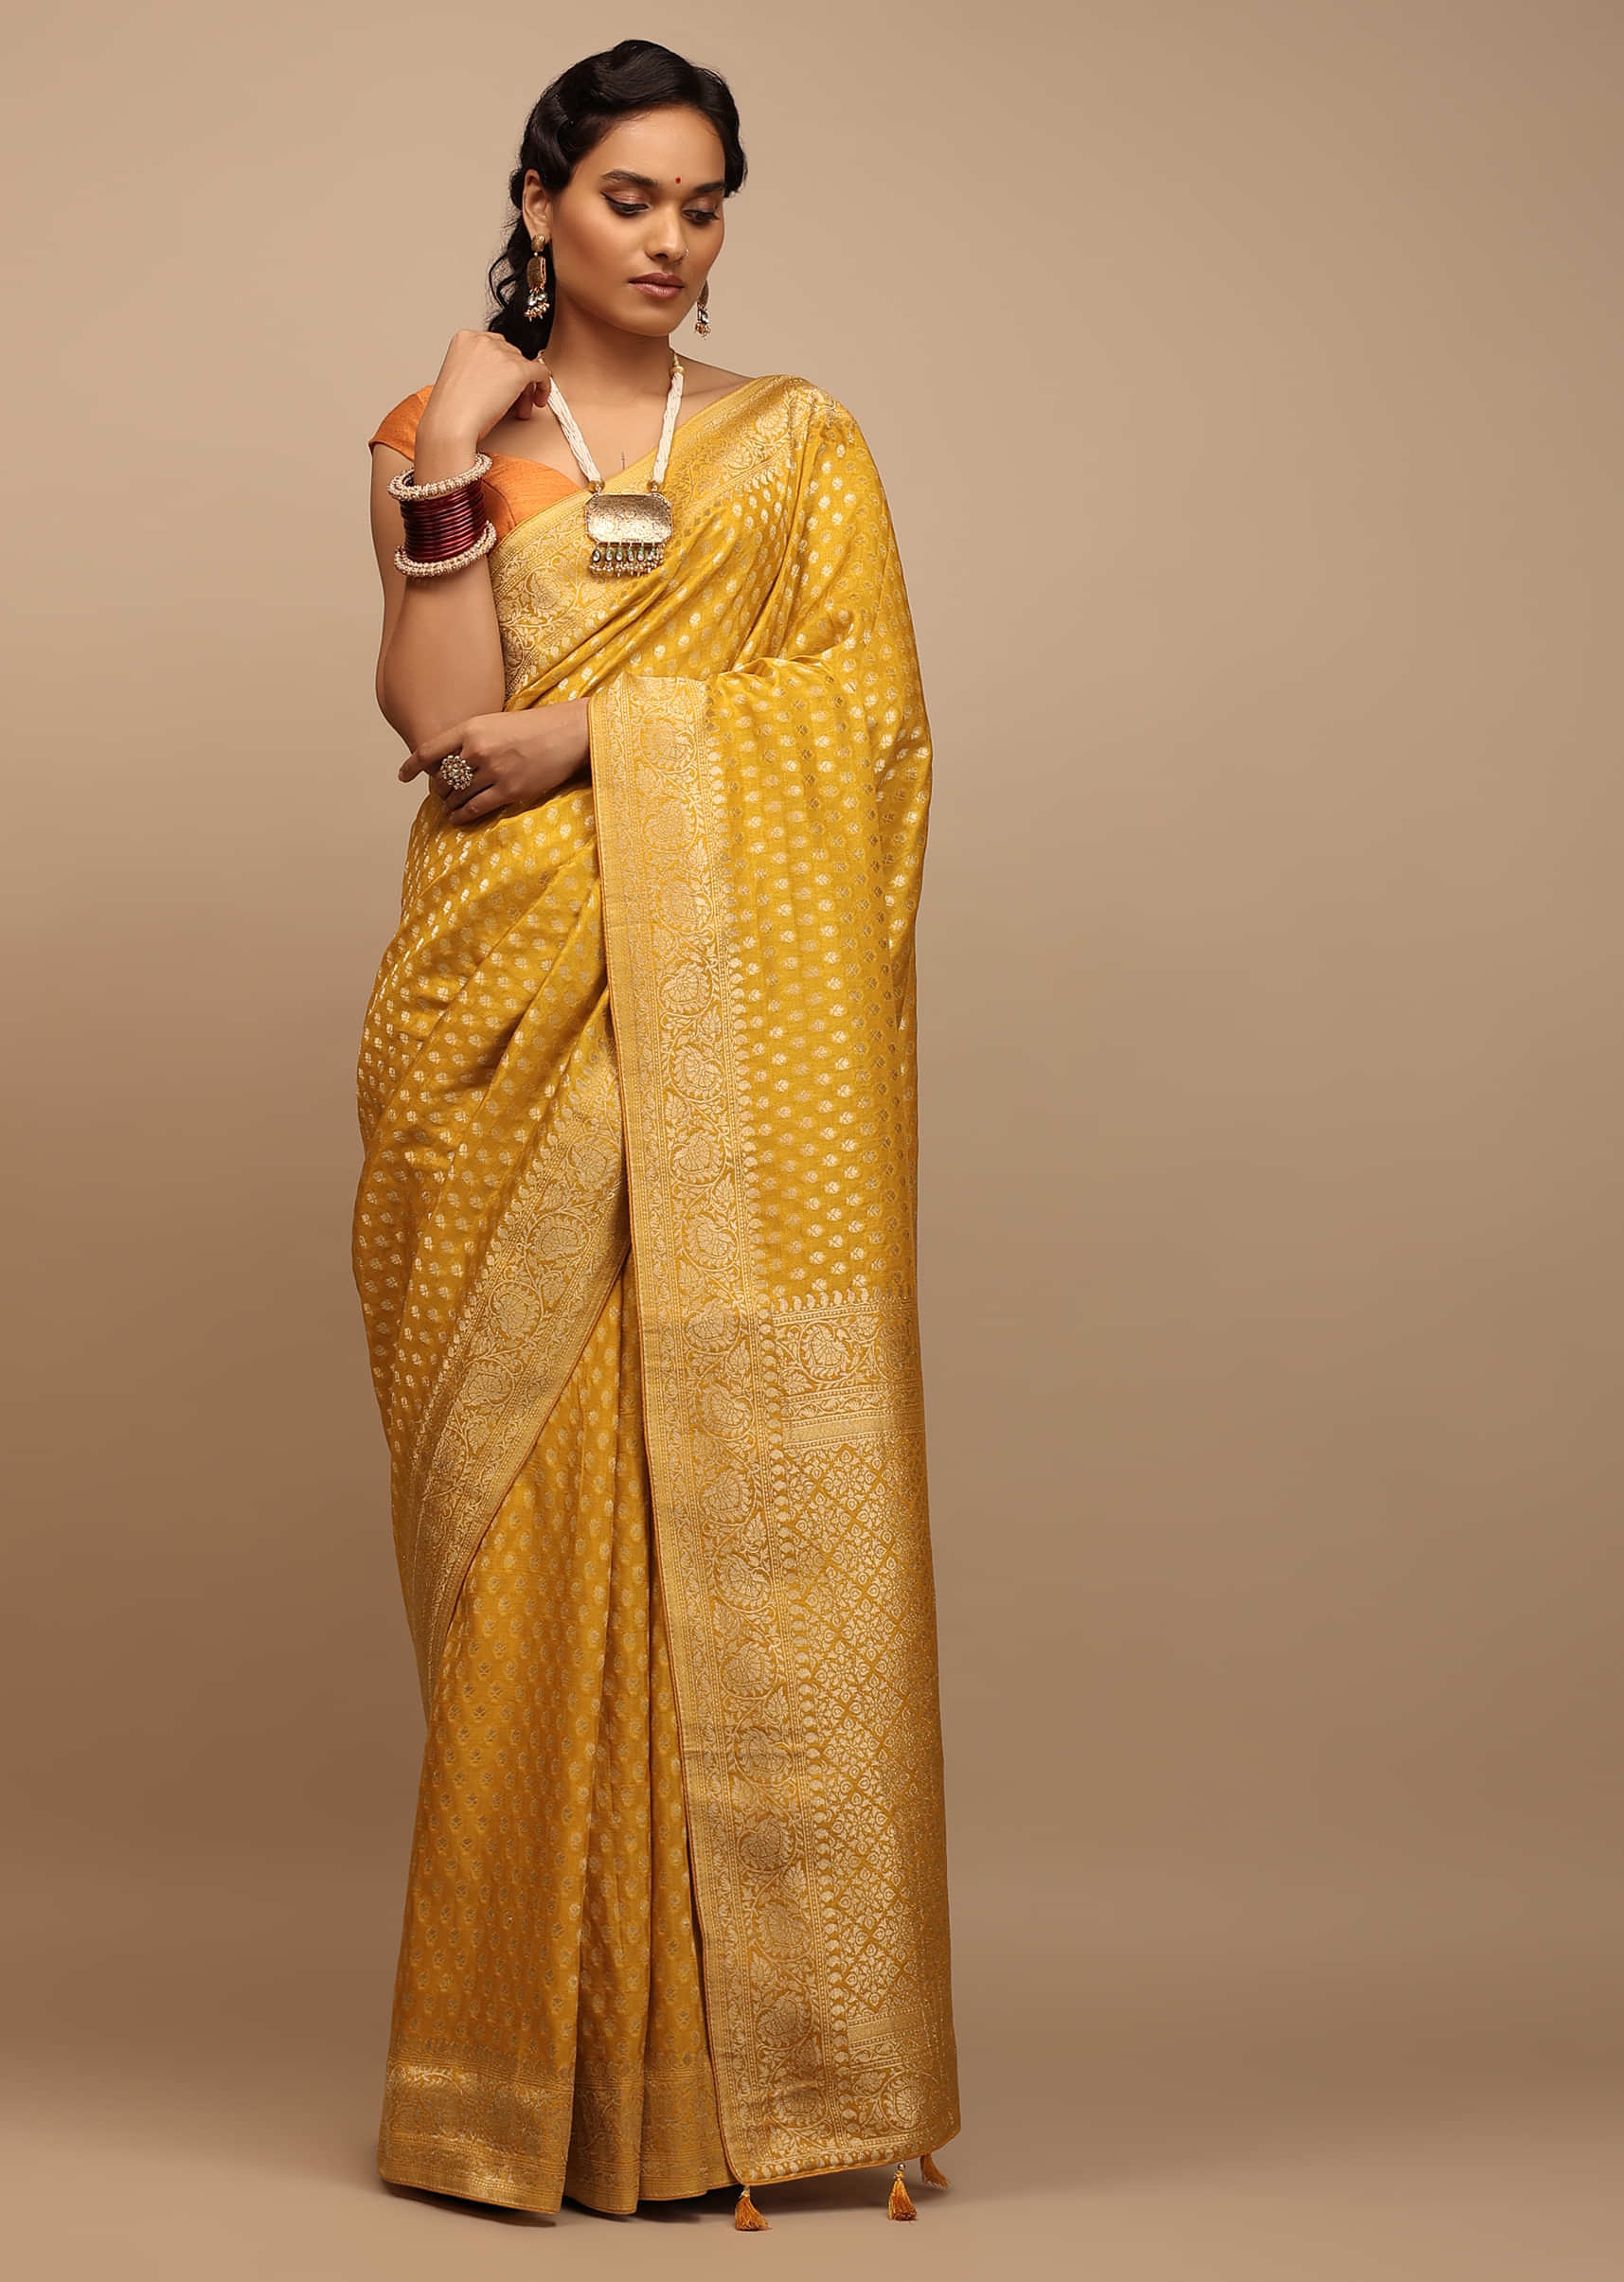 Mustard Yellow Saree In Dola Silk With Woven Buttis And Geometric Moroccan Design On The Pallu